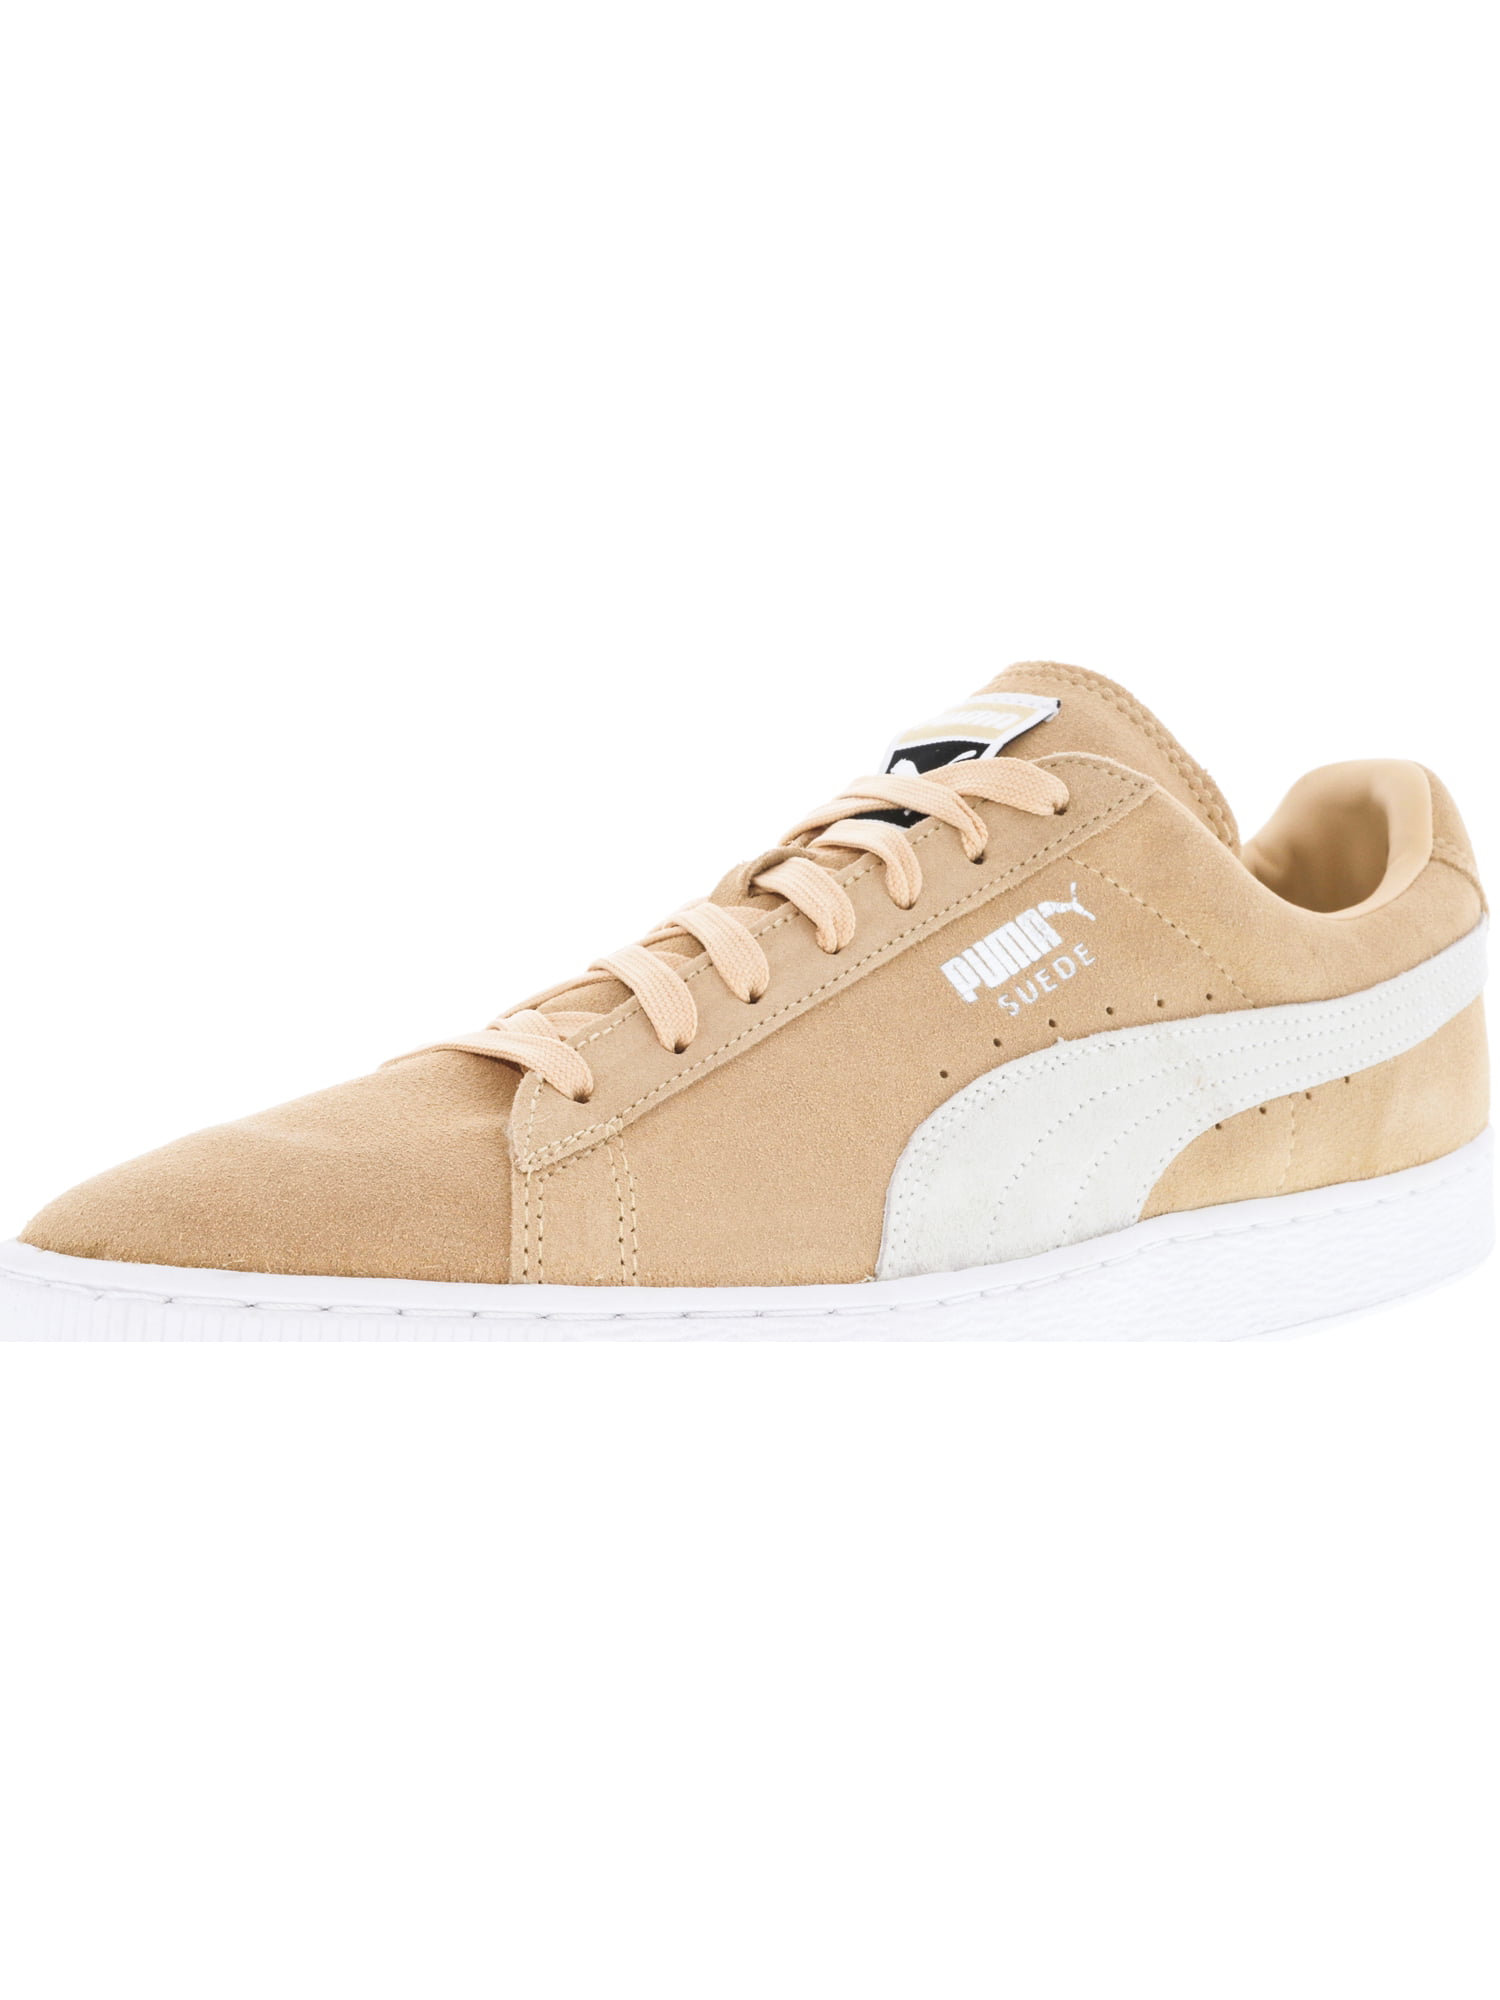 Puma Men's Suede Classic Tan / White Ankle-High Fashion Sneaker - 9.5M -  Walmart.com